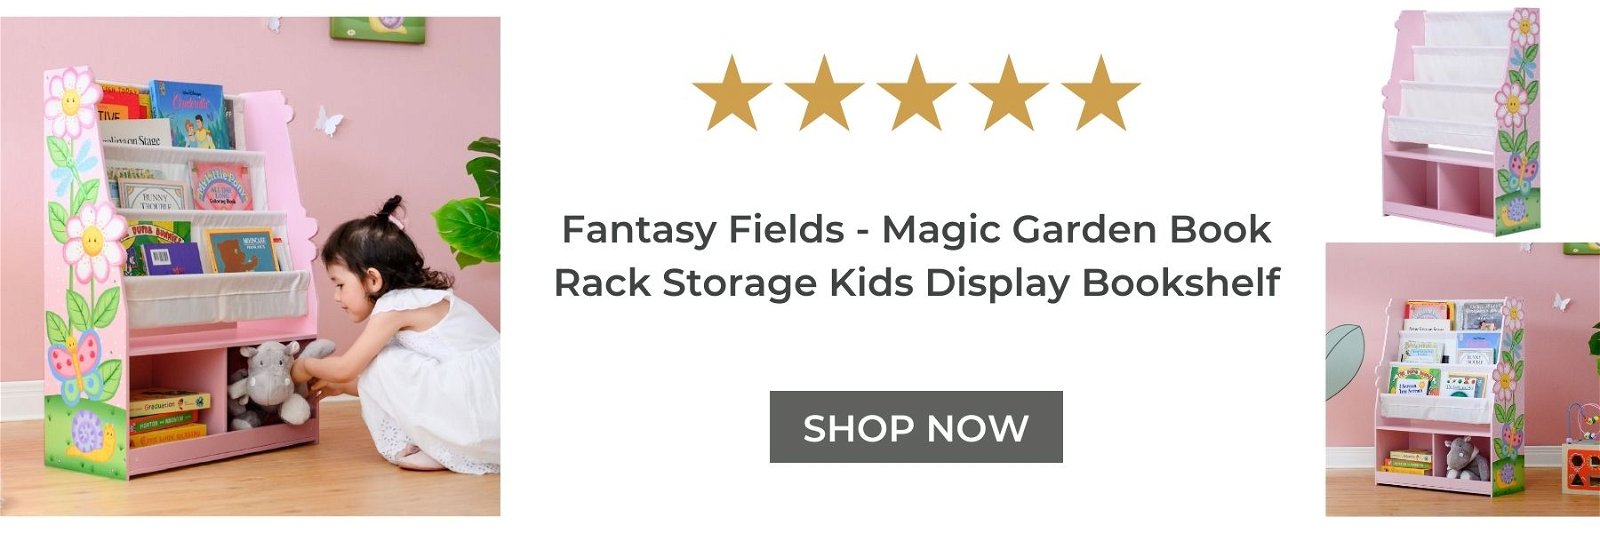 FANTASY FIELDS - MAGIC GARDEN BOOK RACK STORAGE KIDS DISPLAY BOOKSHELF